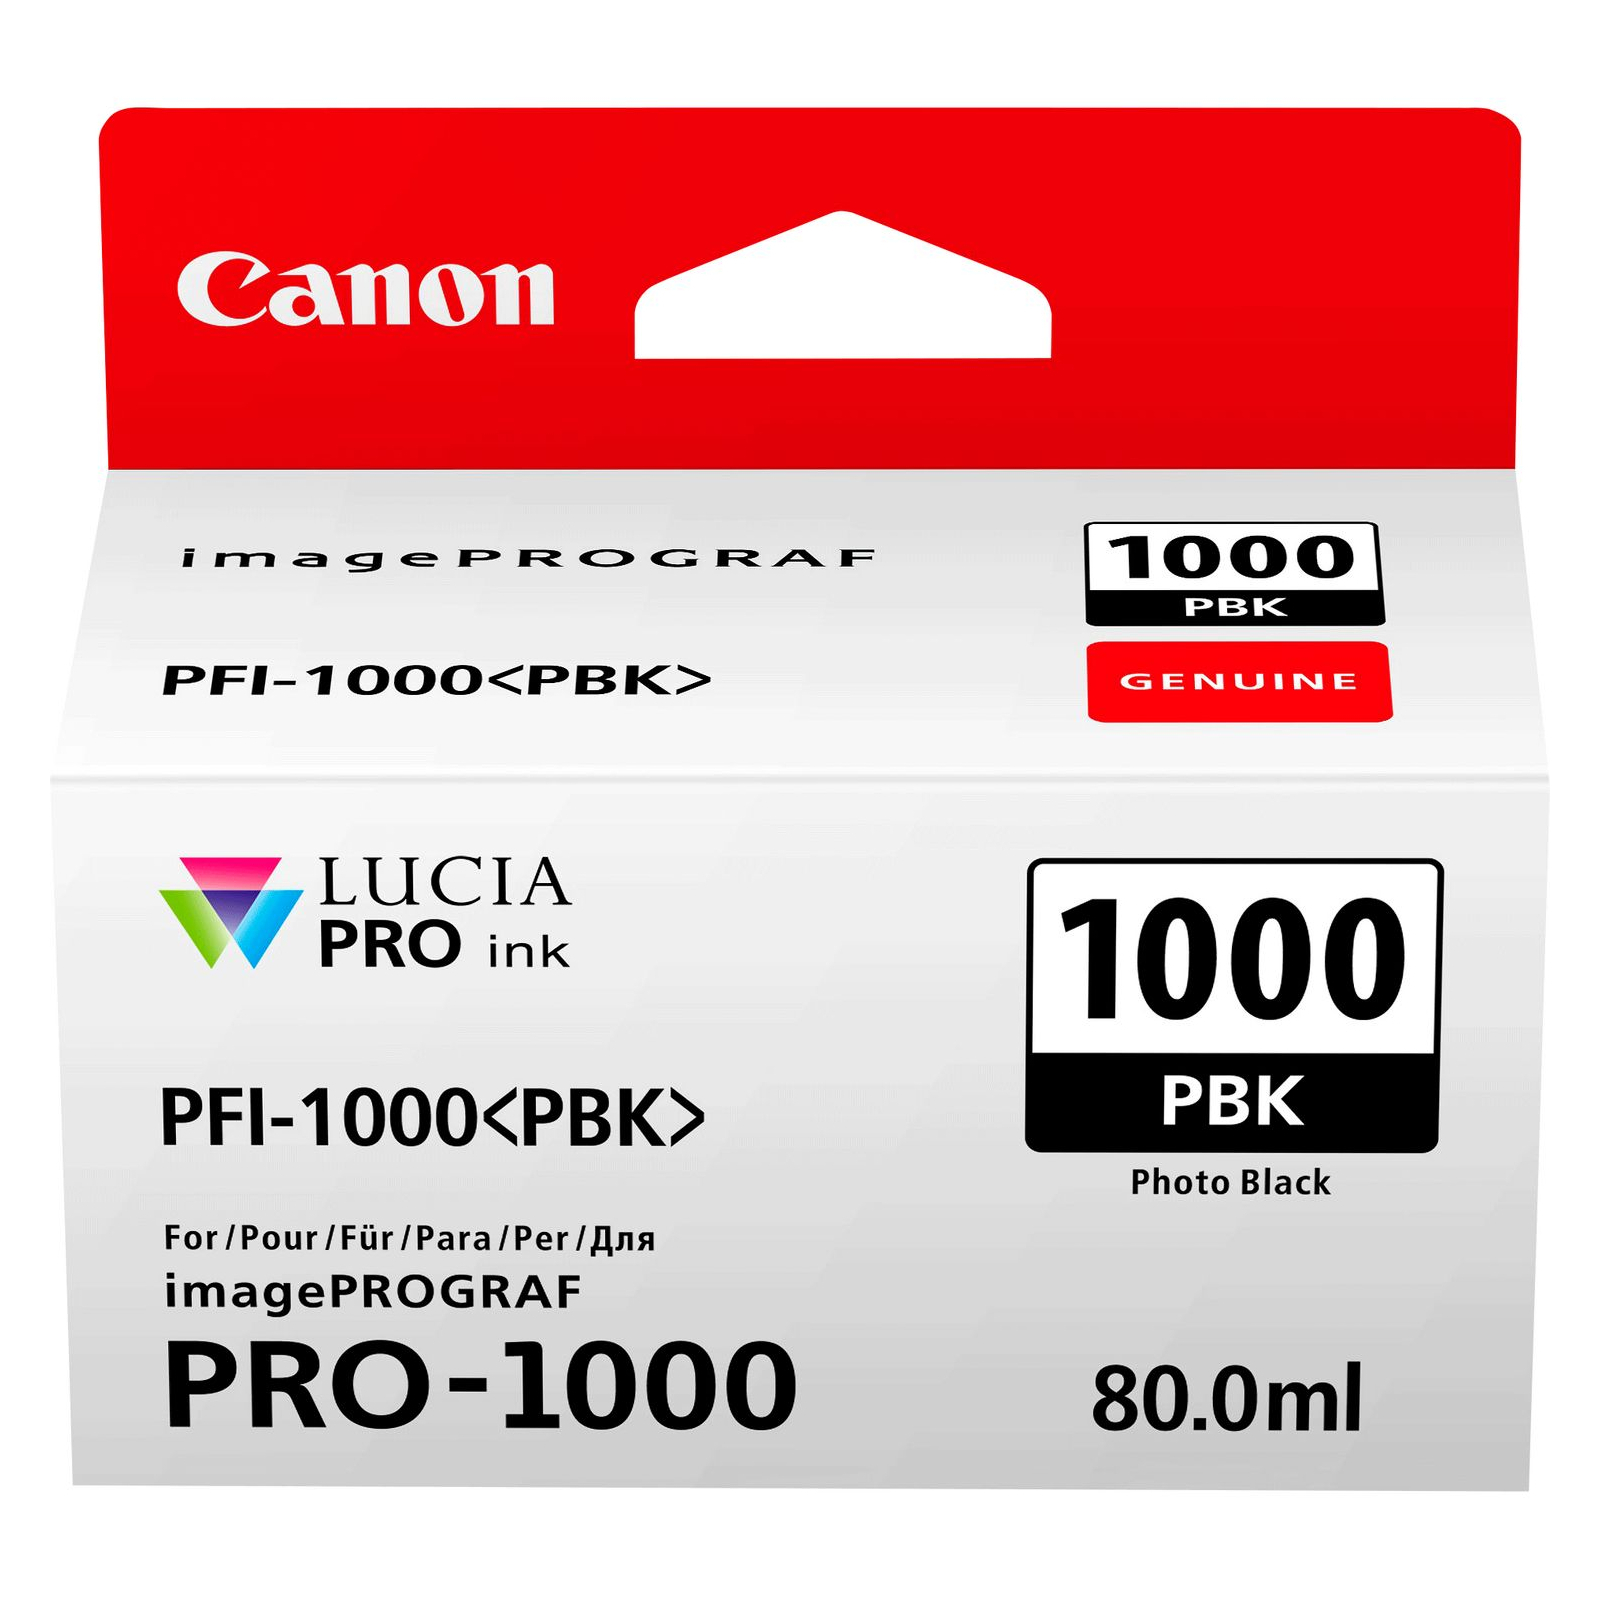 Картридж Canon PFI-1000CO (Chroma Optimizer) (0556C001)